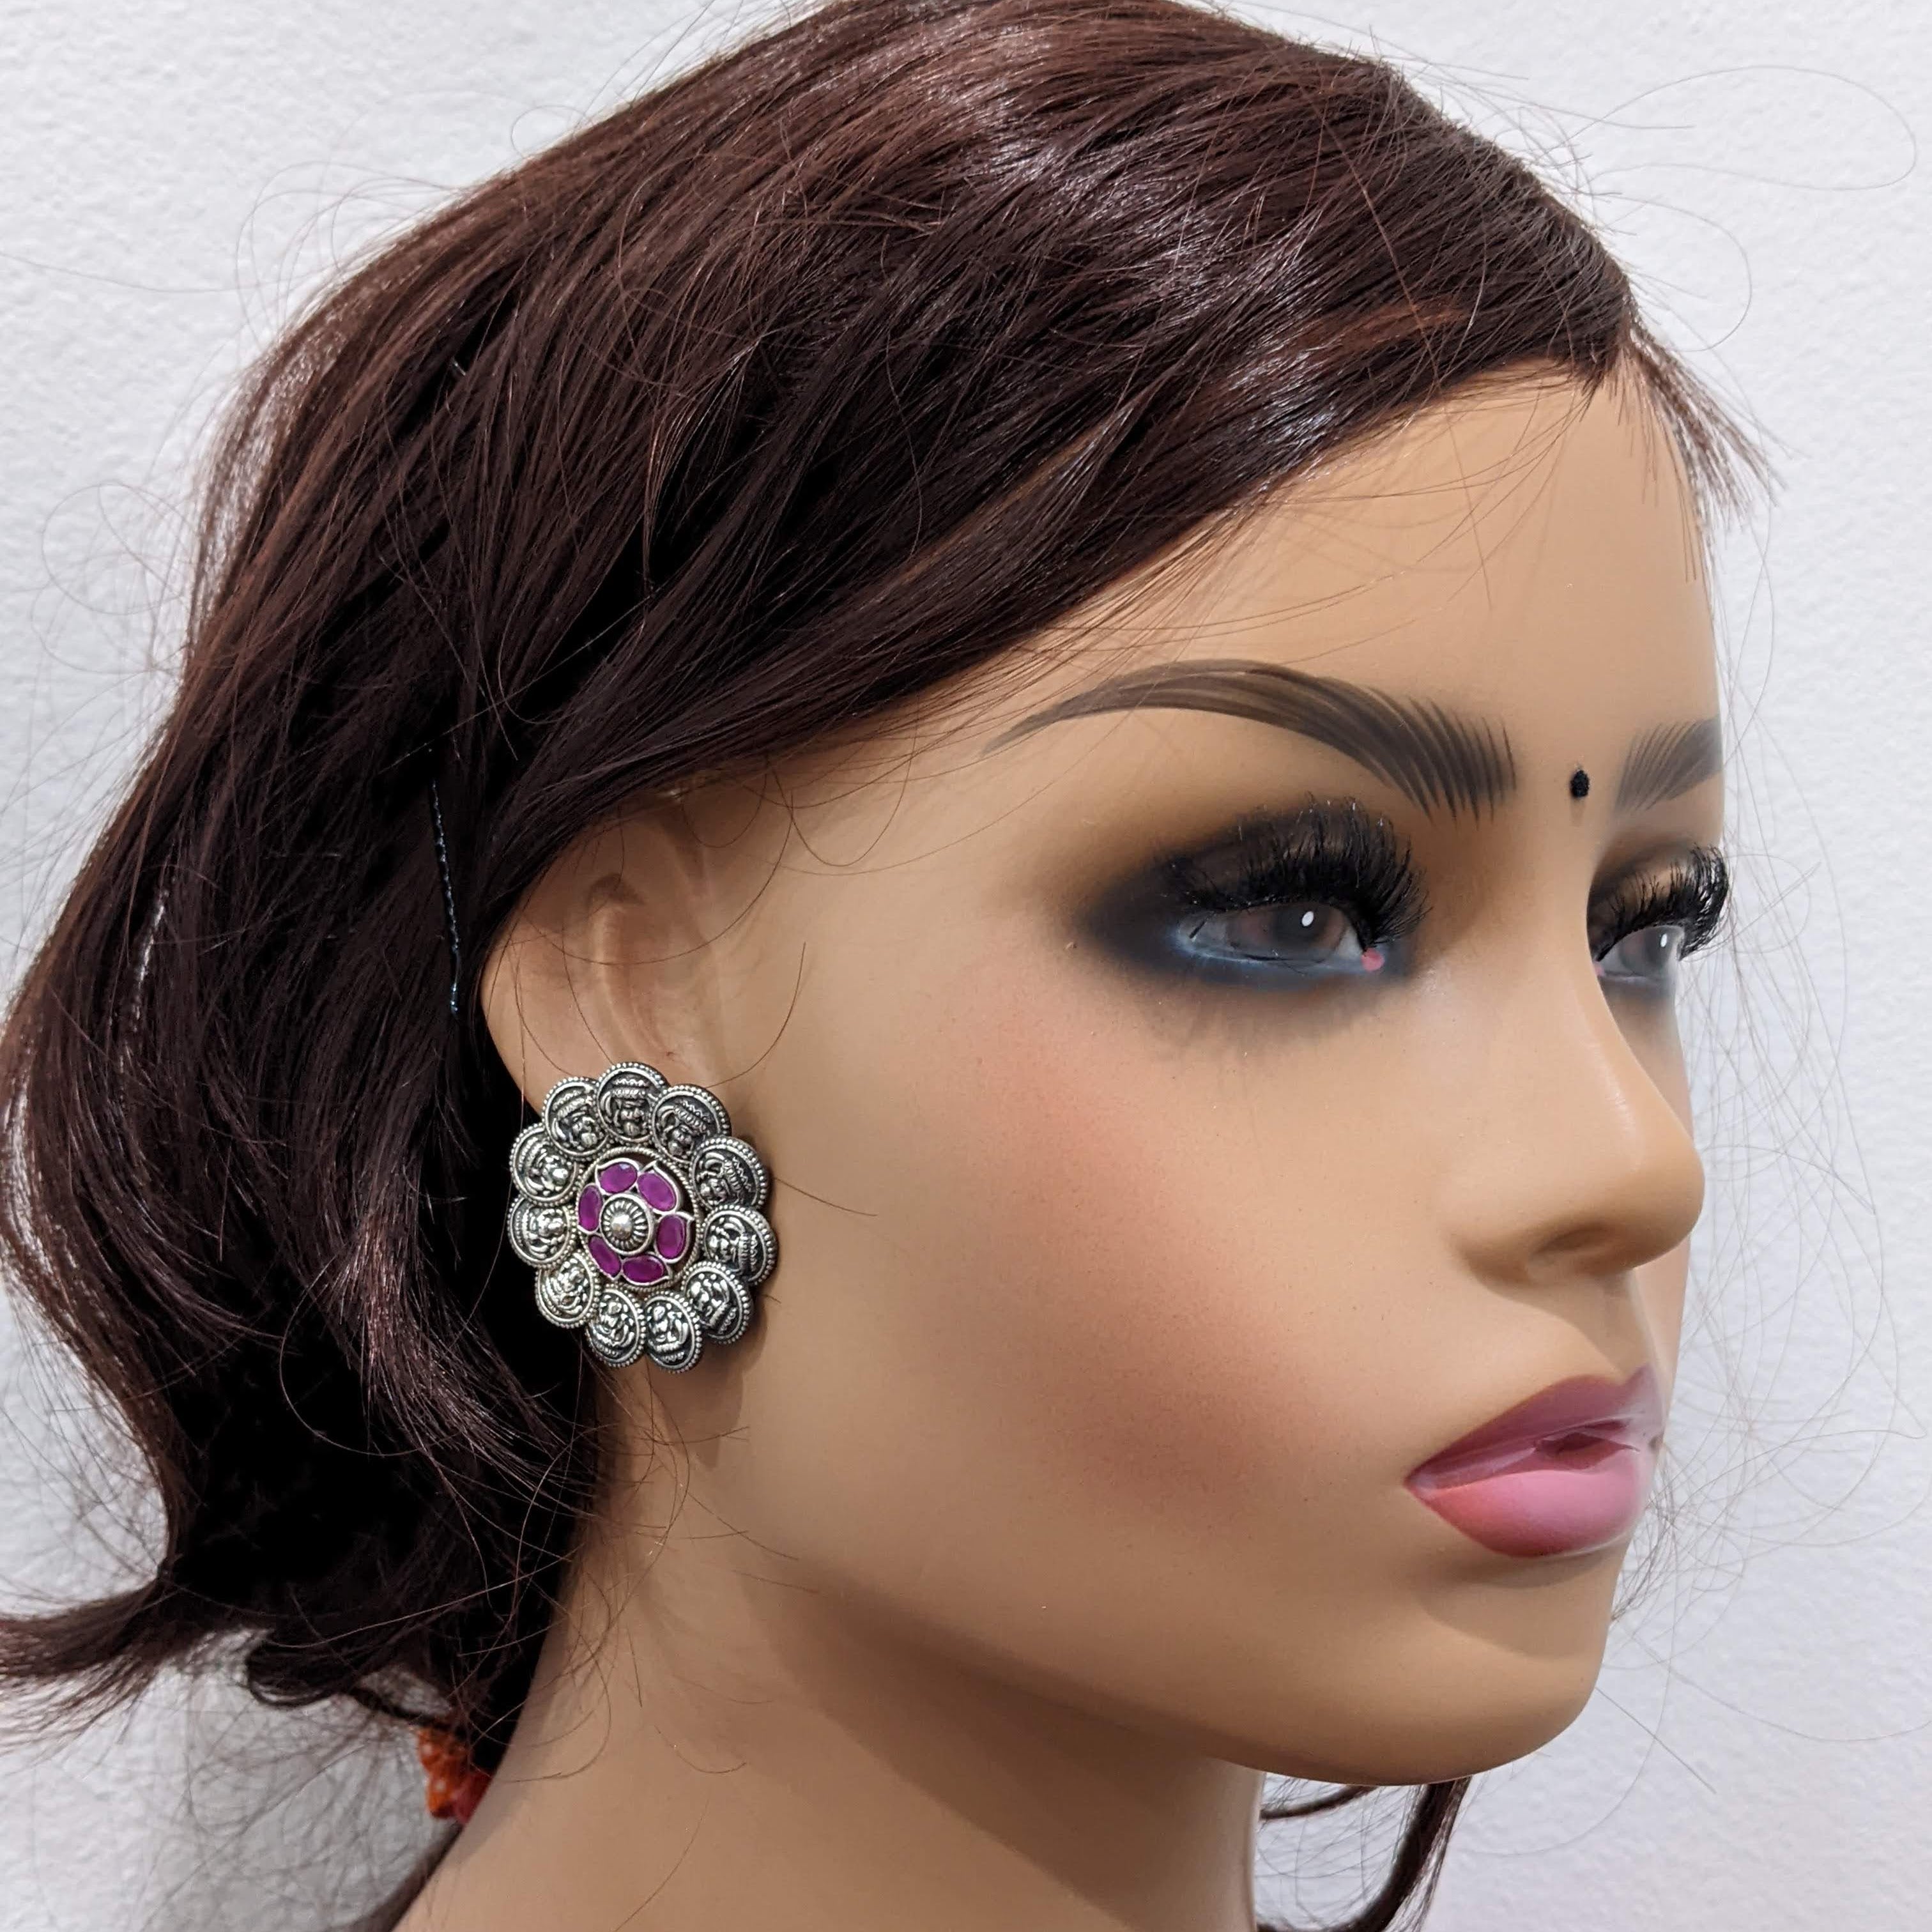 German silver earrings Little Lotus India